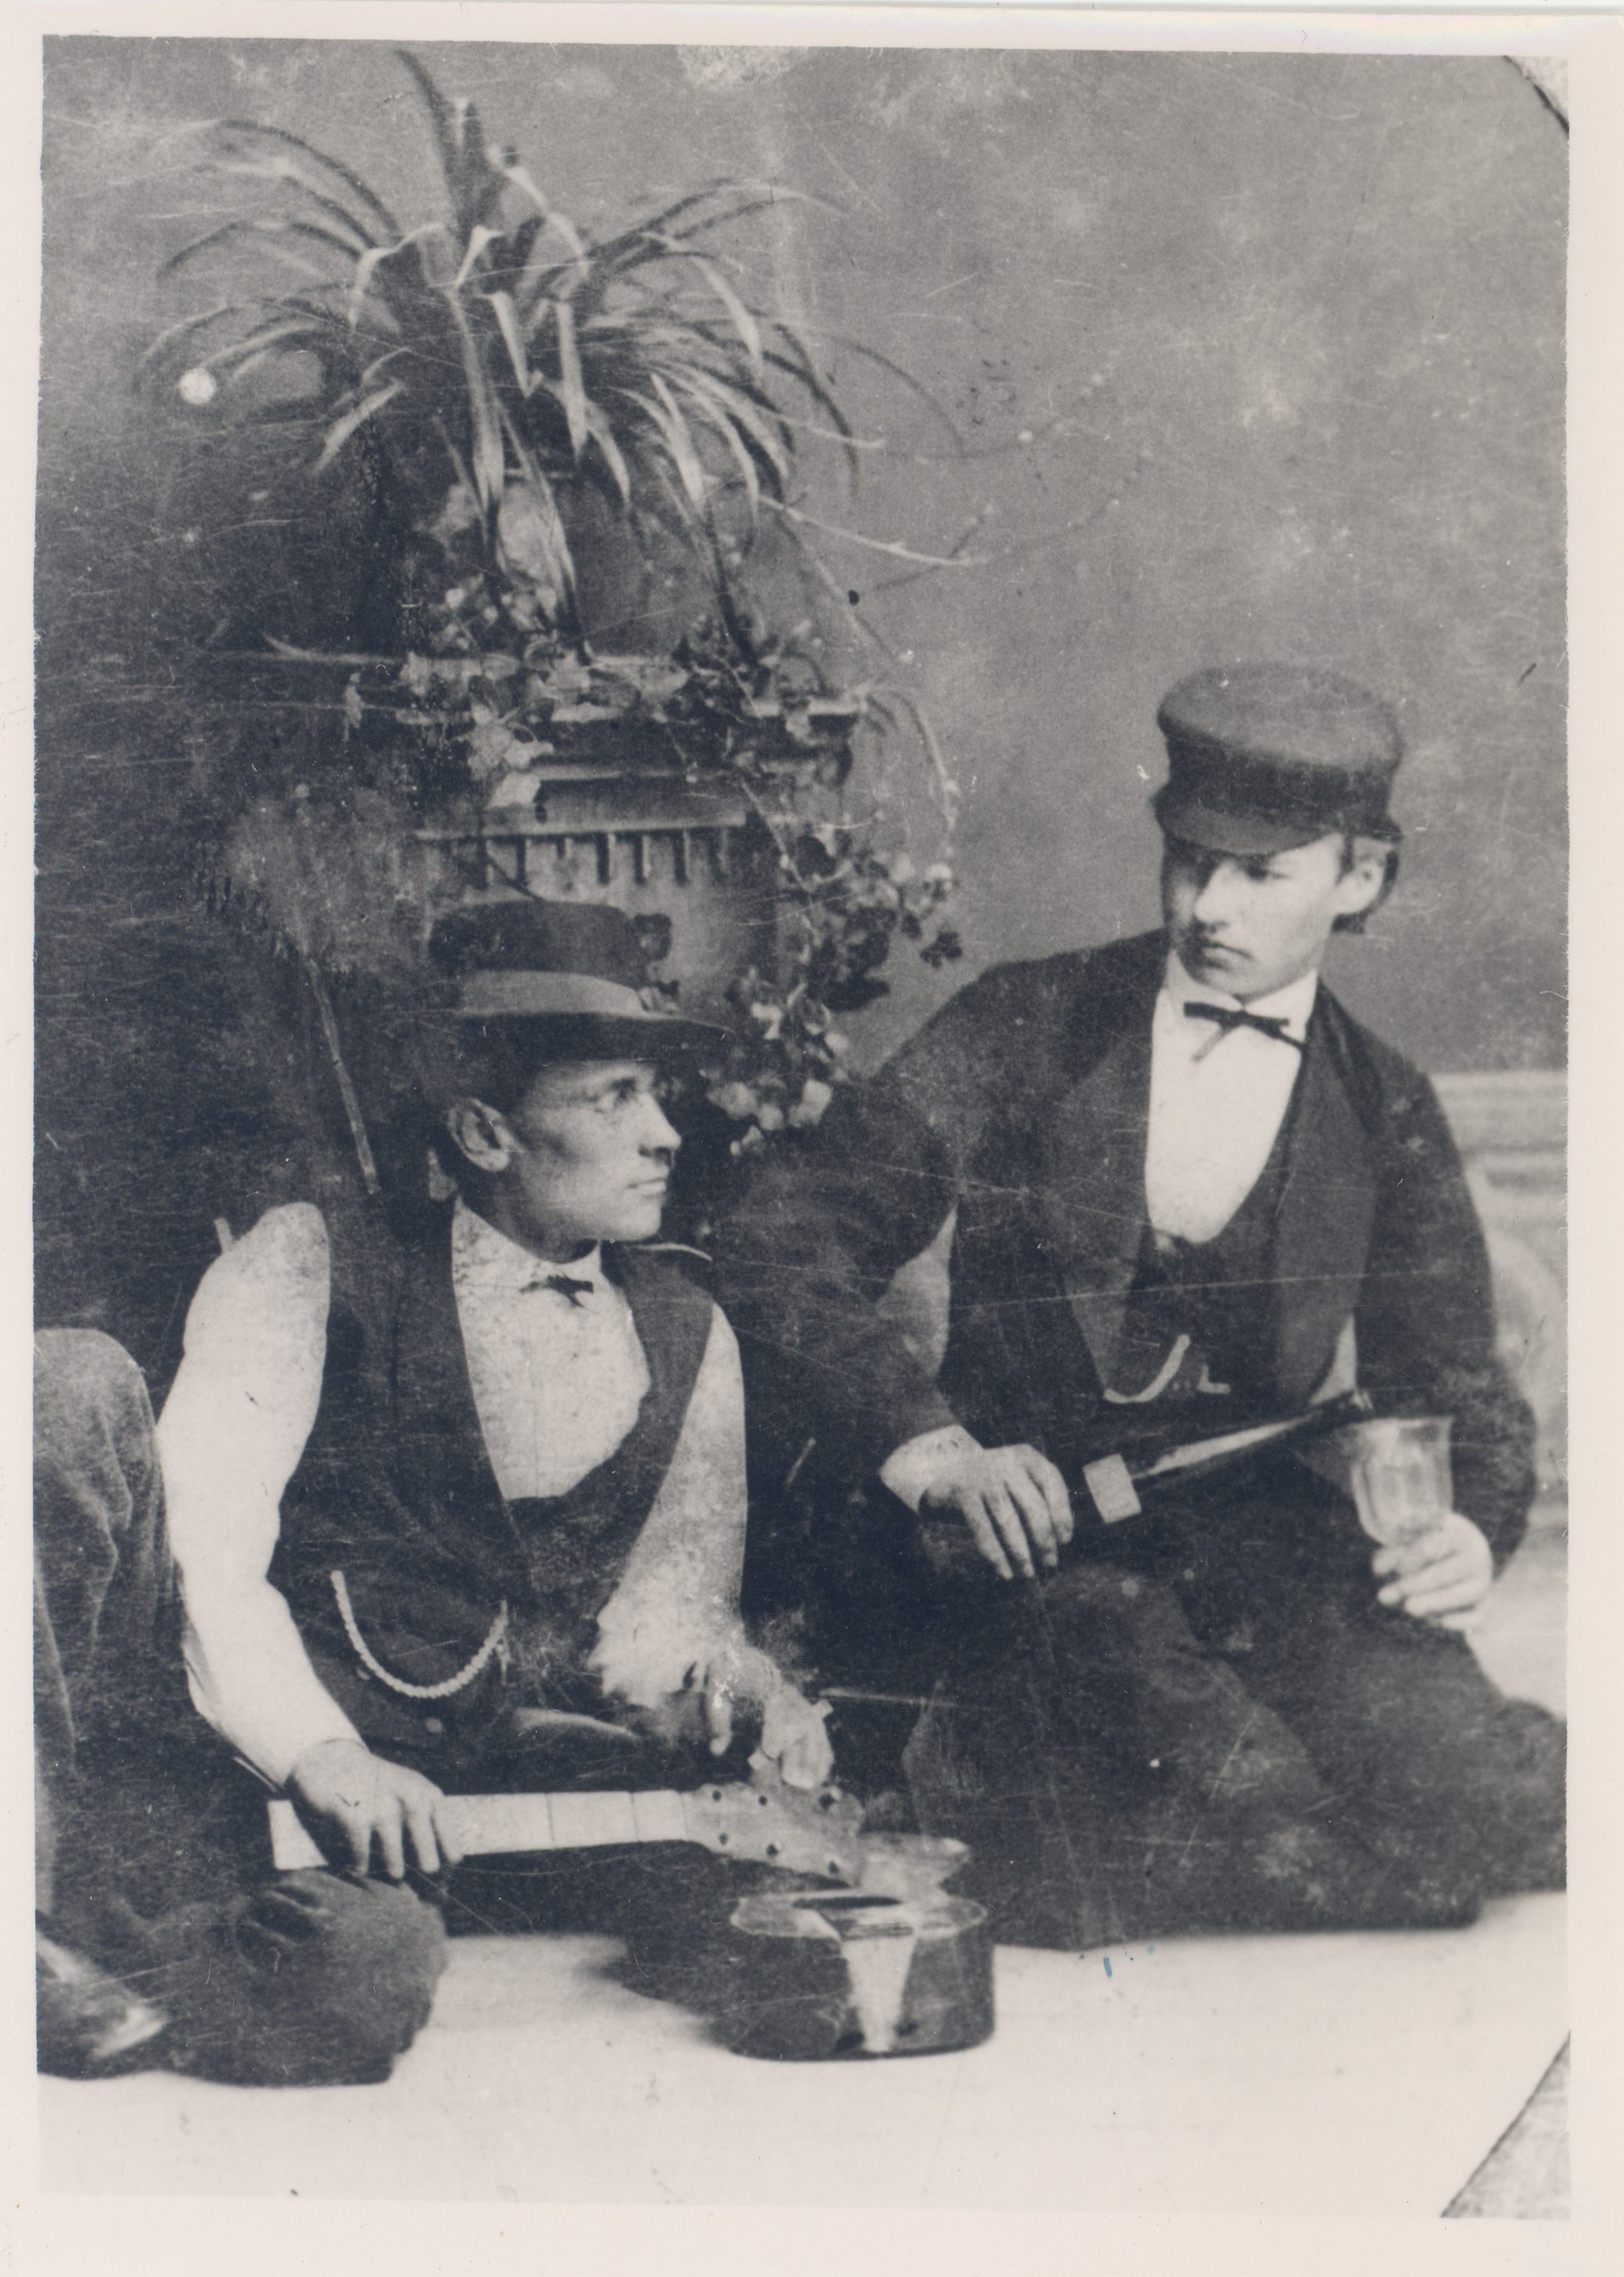 A. Kitzberg with a friend in the Pöögle-Poll era